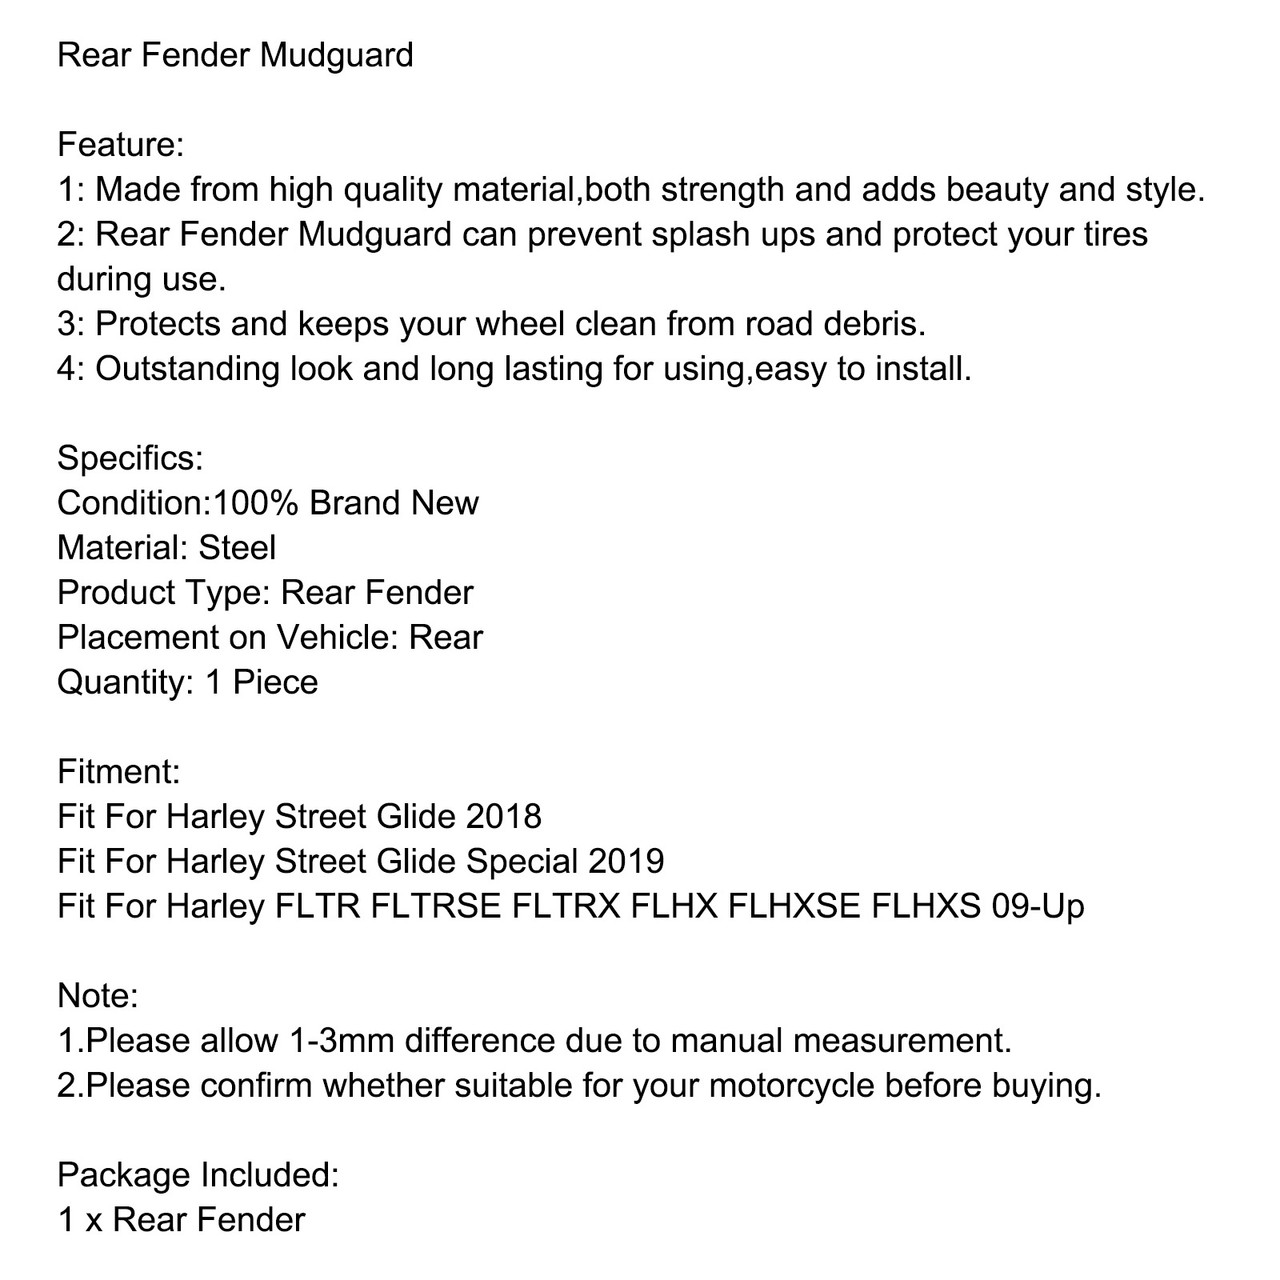 Rear Fender Mudguard Fit For Harley Street Glide 2018 Special 2019 FLTR FLTRSE FLTRX FLHX FLHXSE FLHXS 09-Up BLK